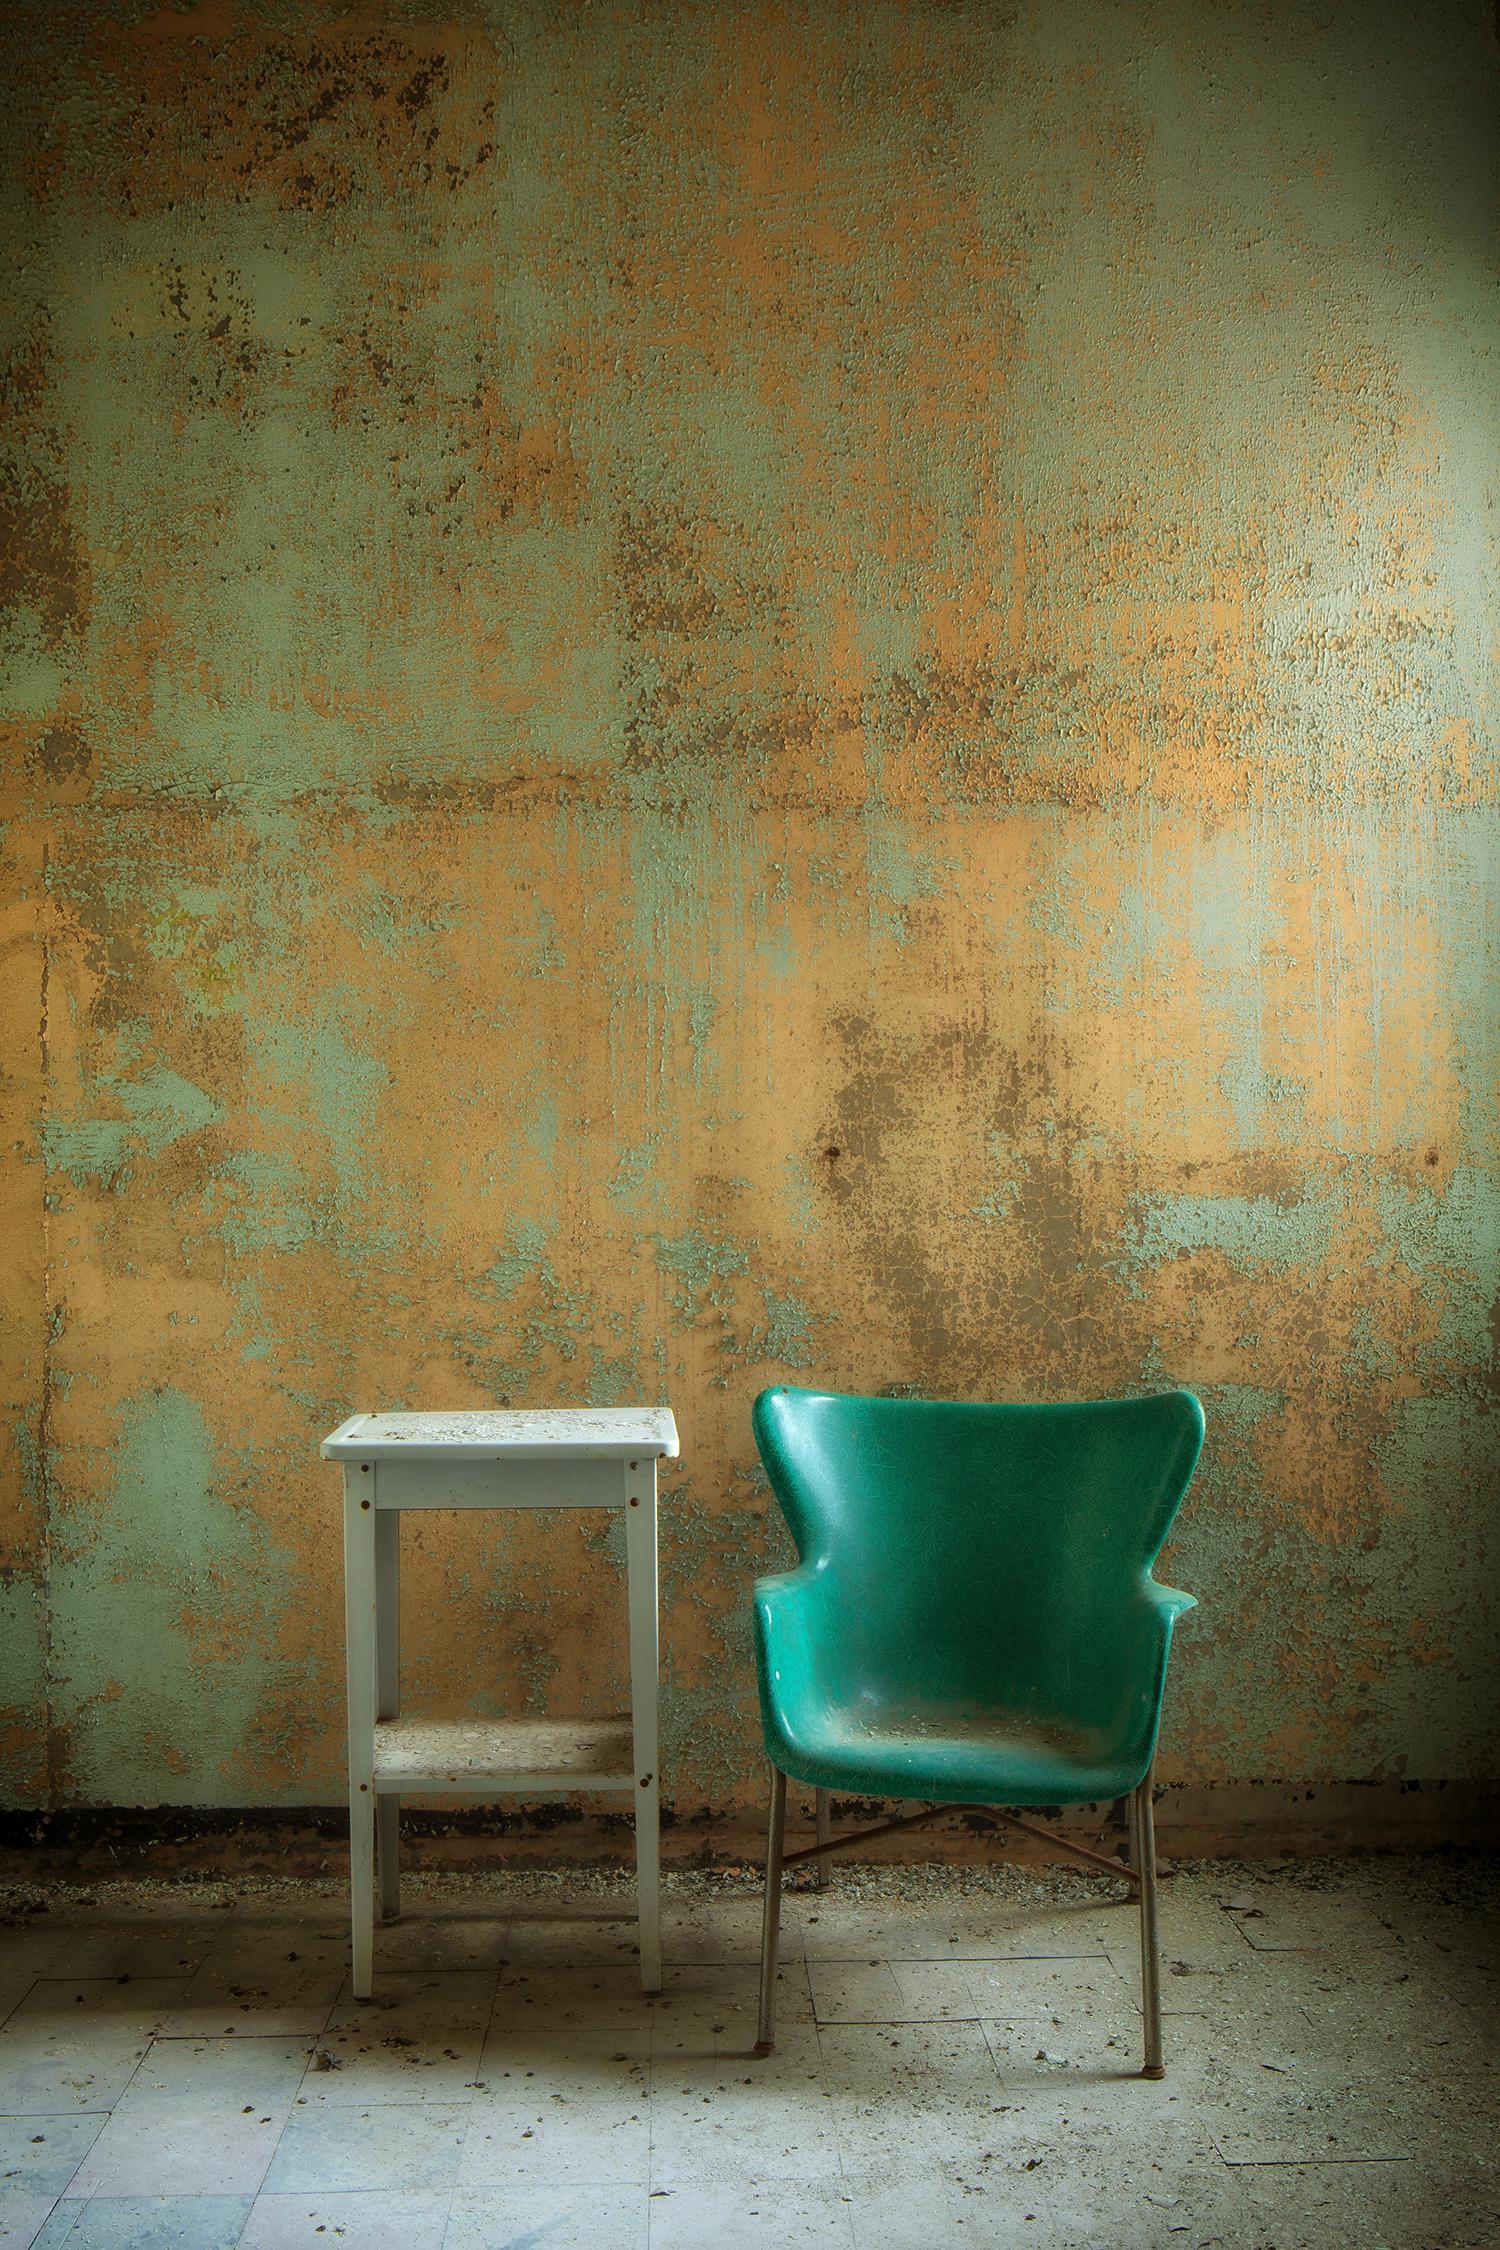 Rebecca Skinner Color Photograph – "Links", zeitgenössisch, verlassenes Krankenhaus, Stuhl, blau, grün, Farbfotografie